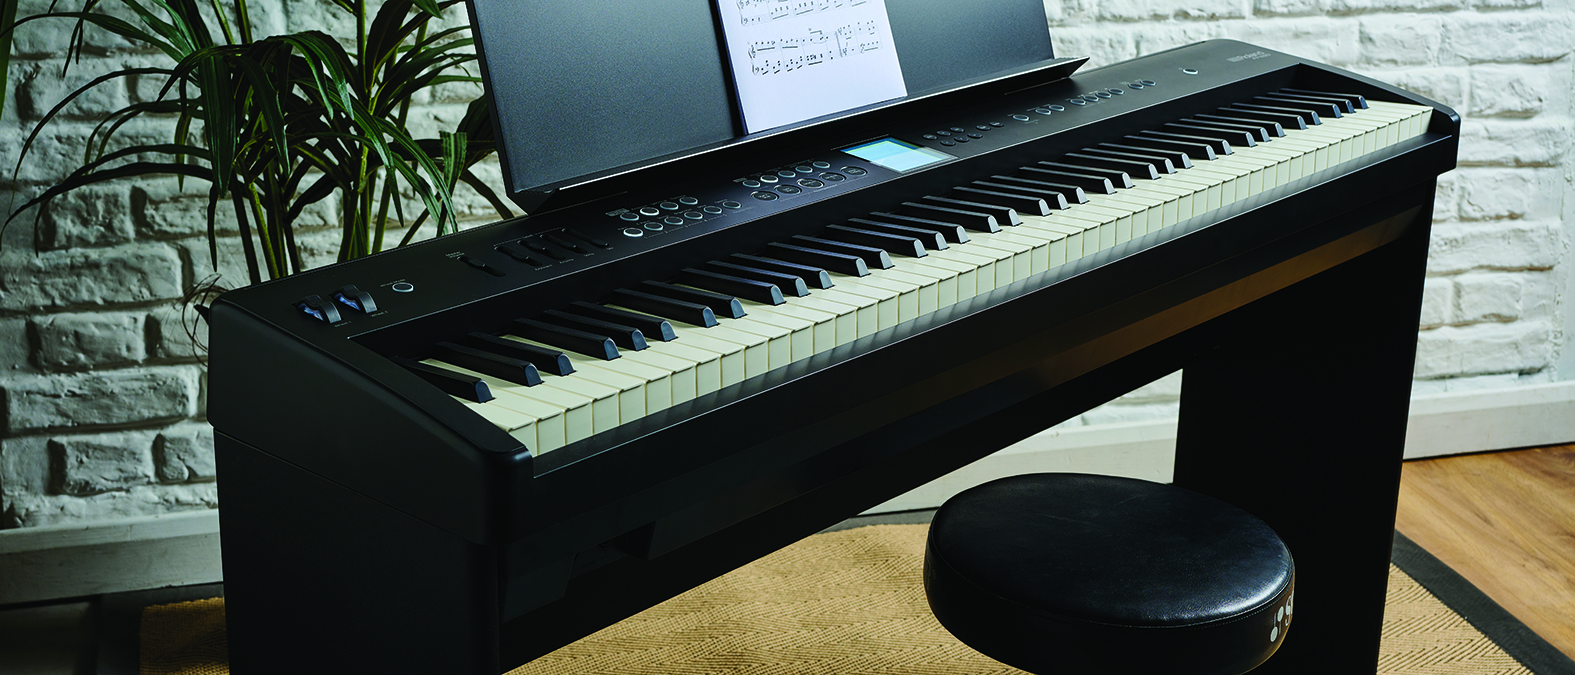 Roland FP-10 Digital Piano Review & Demo - SuperNATURAL Piano, Bluetooth  Audio, PHA-4 Action